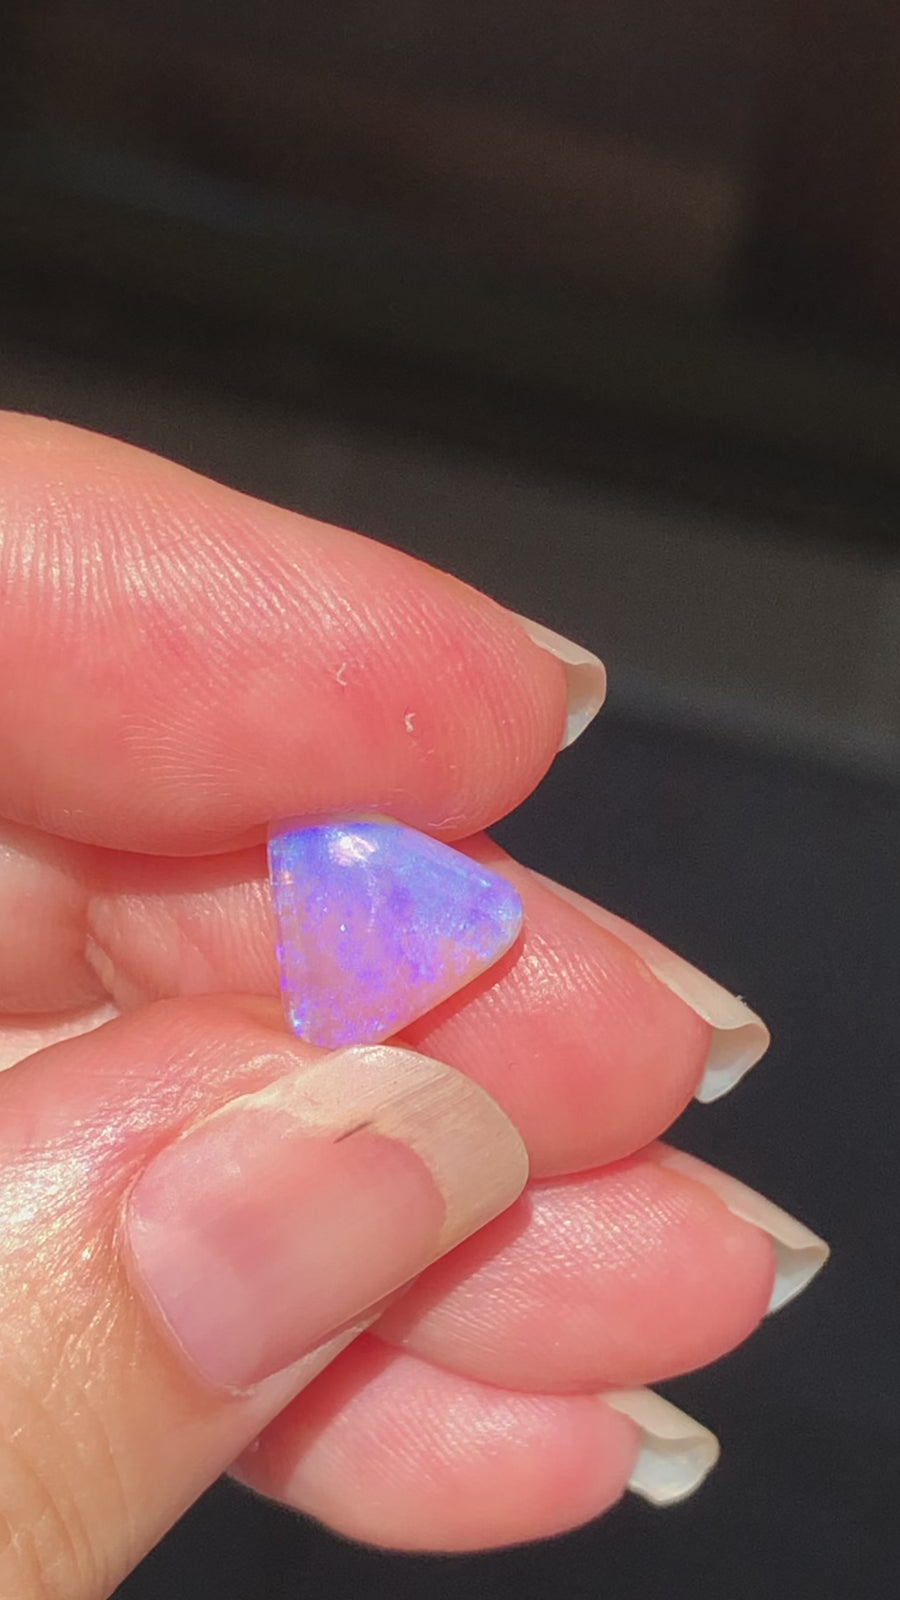 Lightning Ridge purple crystal opal 12